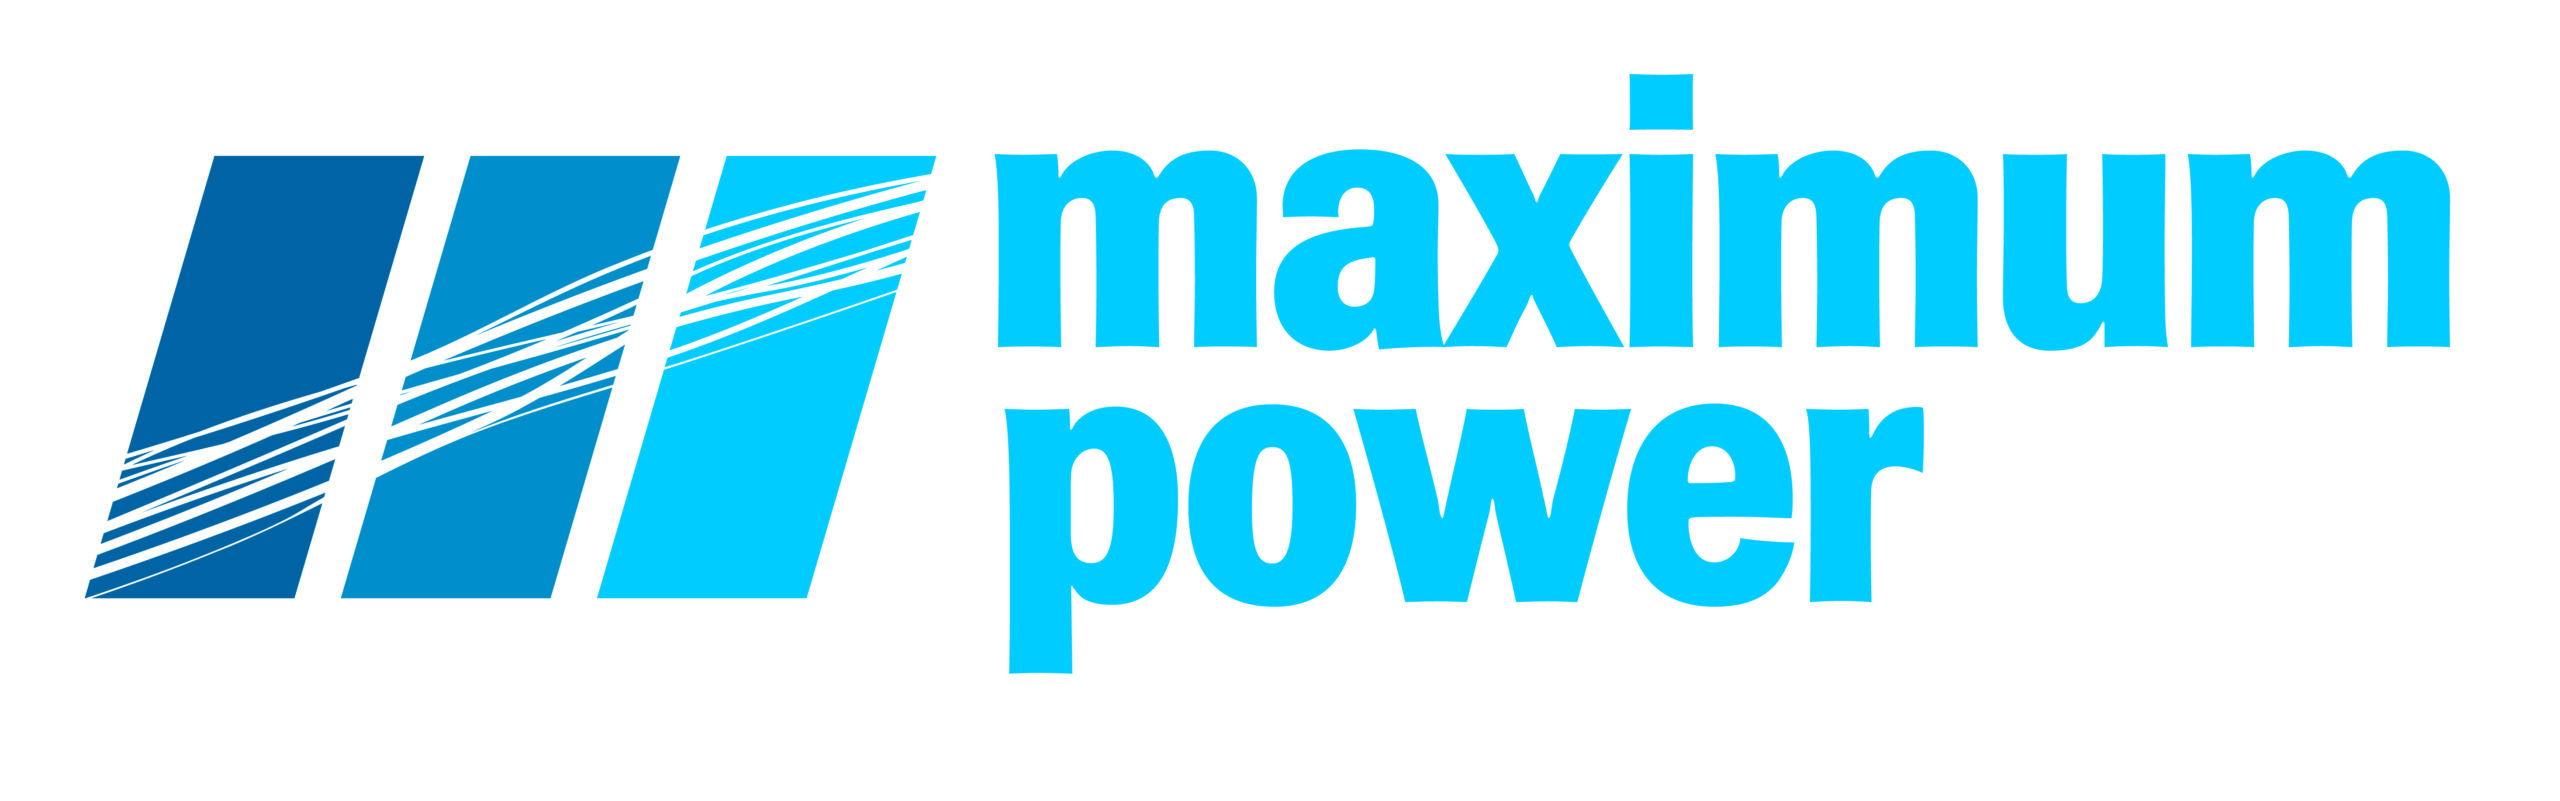 Maximum Power